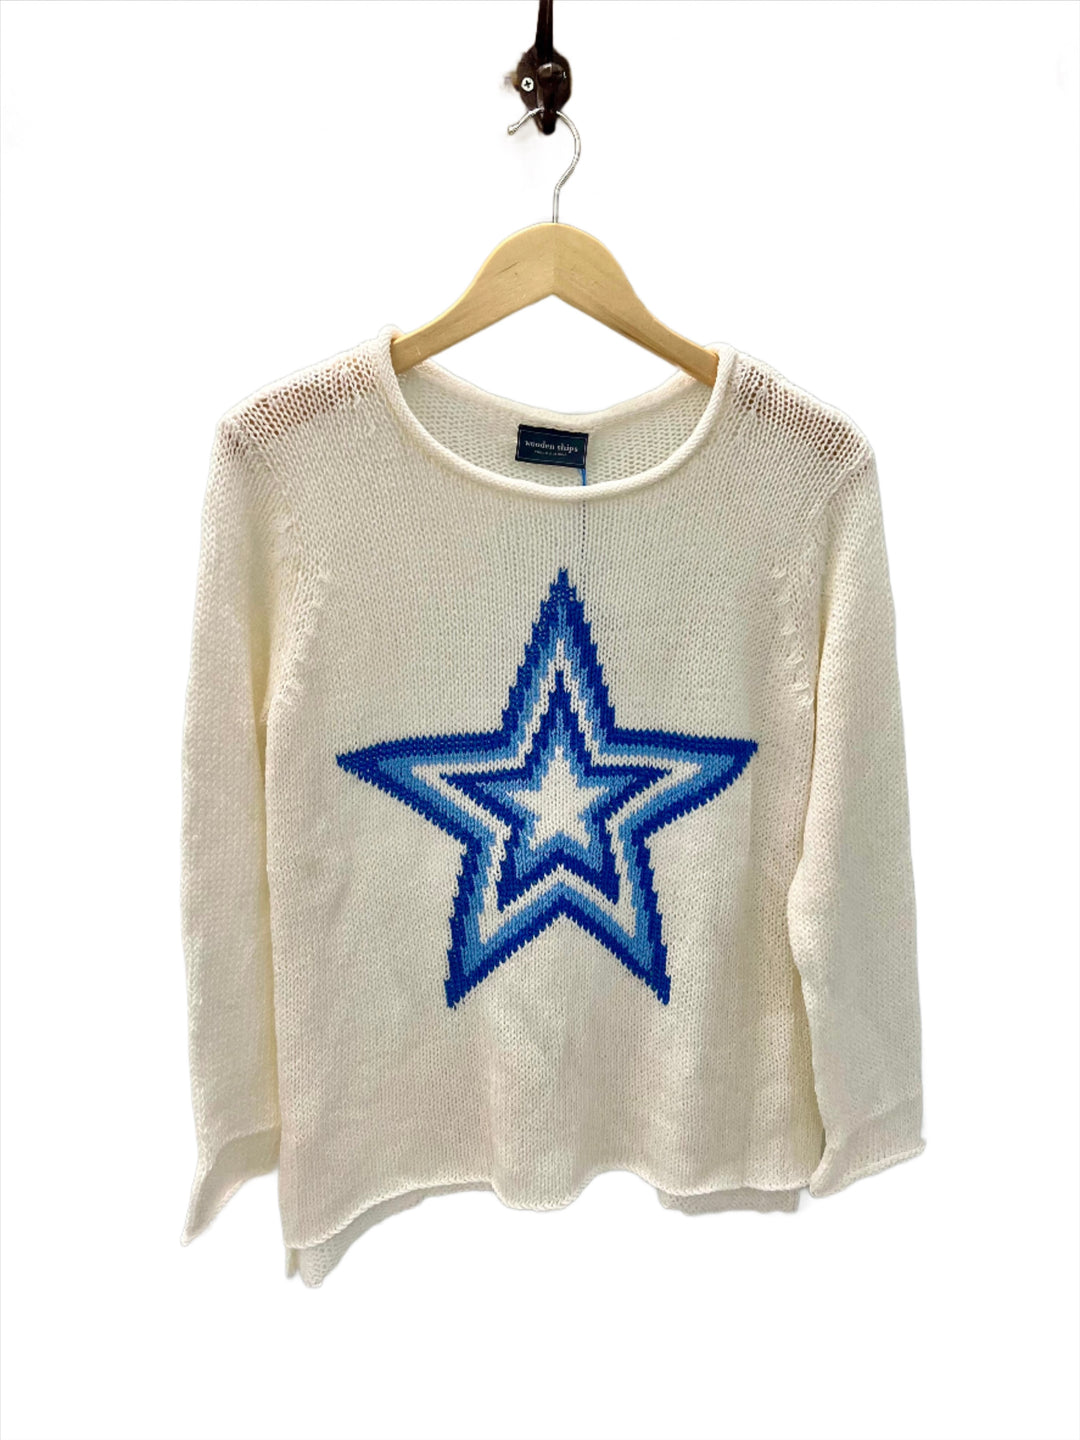 Starry Crew Sweater